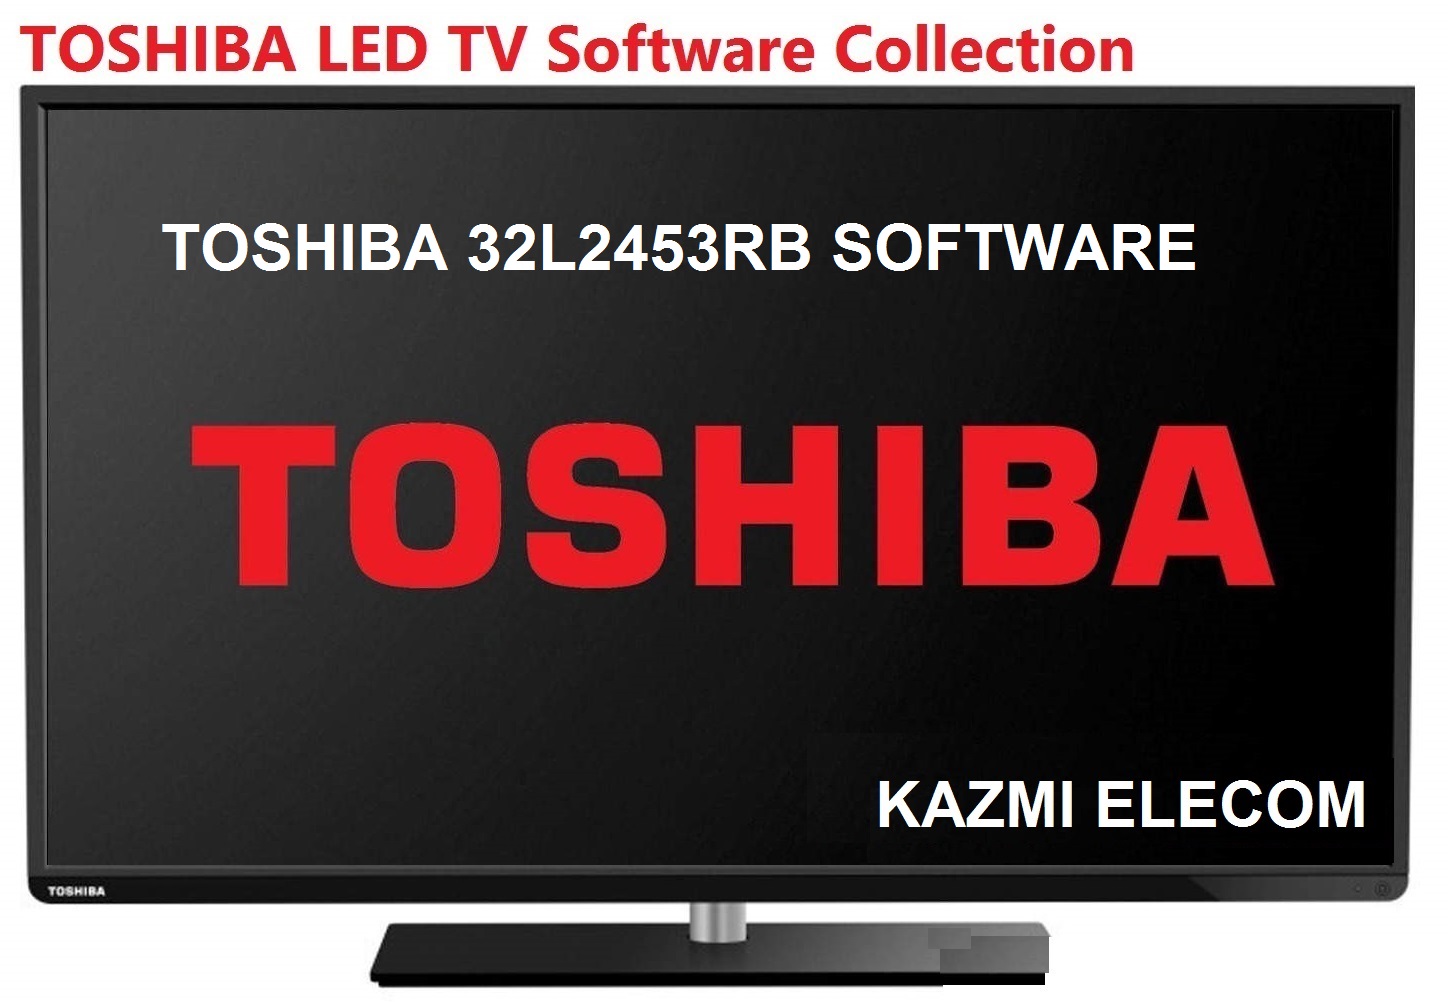 Toshiba 32L2453Rb